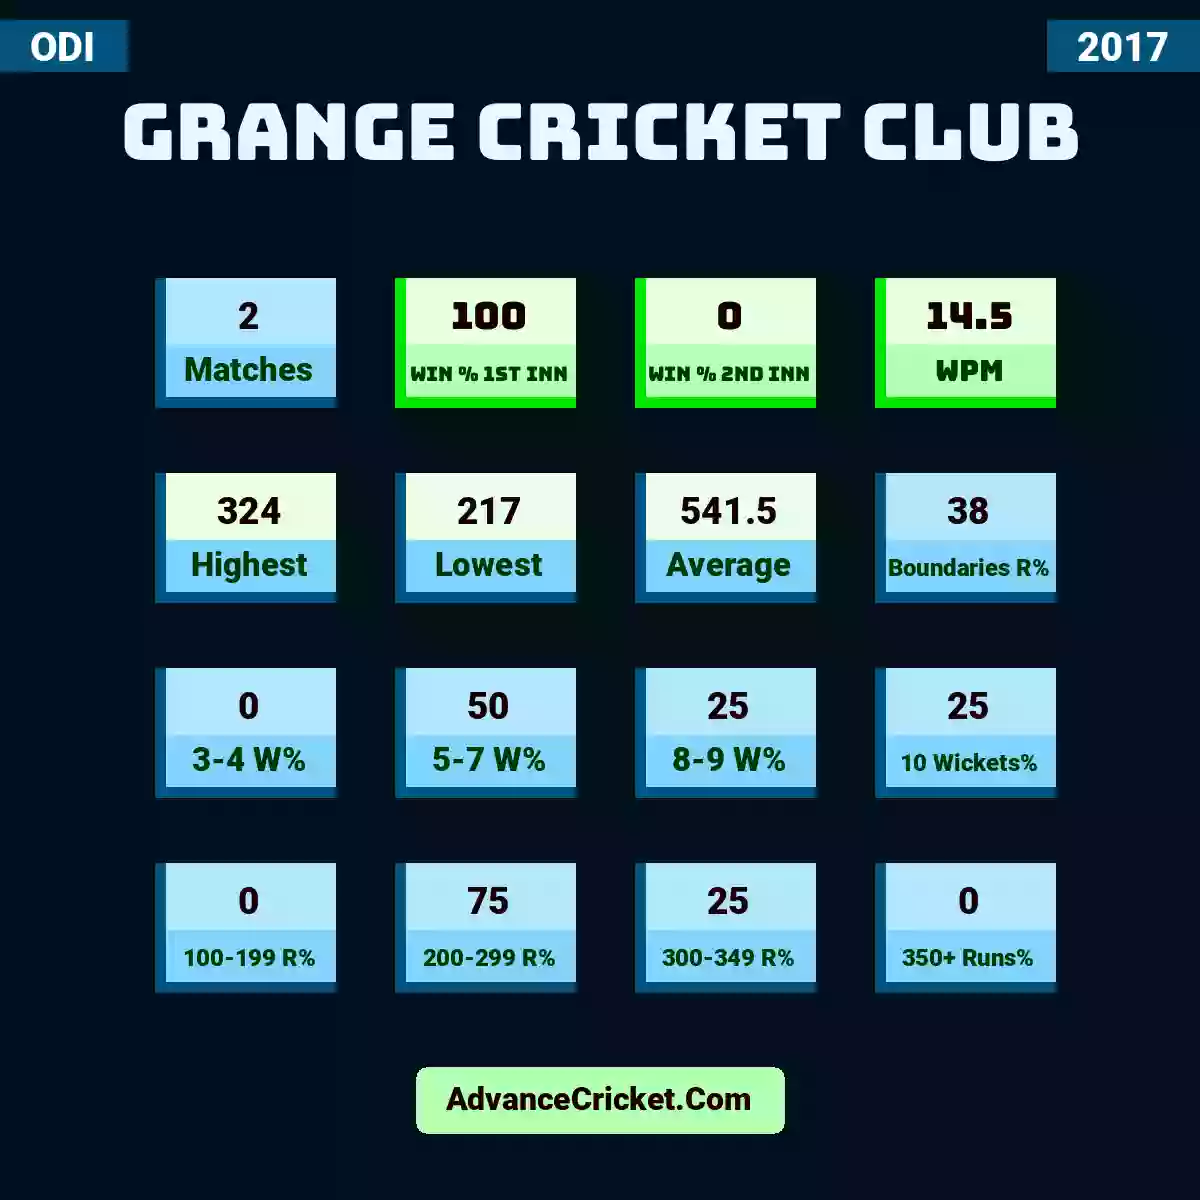 Image showing Grange Cricket Club with Matches: 2, Win % 1st Inn: 100, Win % 2nd Inn: 0, WPM: 14.5, Highest: 324, Lowest: 217, Average: 541.5, Boundaries R%: 38, 3-4 W%: 0, 5-7 W%: 50, 8-9 W%: 25, 10 Wickets%: 25, 100-199 R%: 0, 200-299 R%: 75, 300-349 R%: 25, 350+ Runs%: 0.